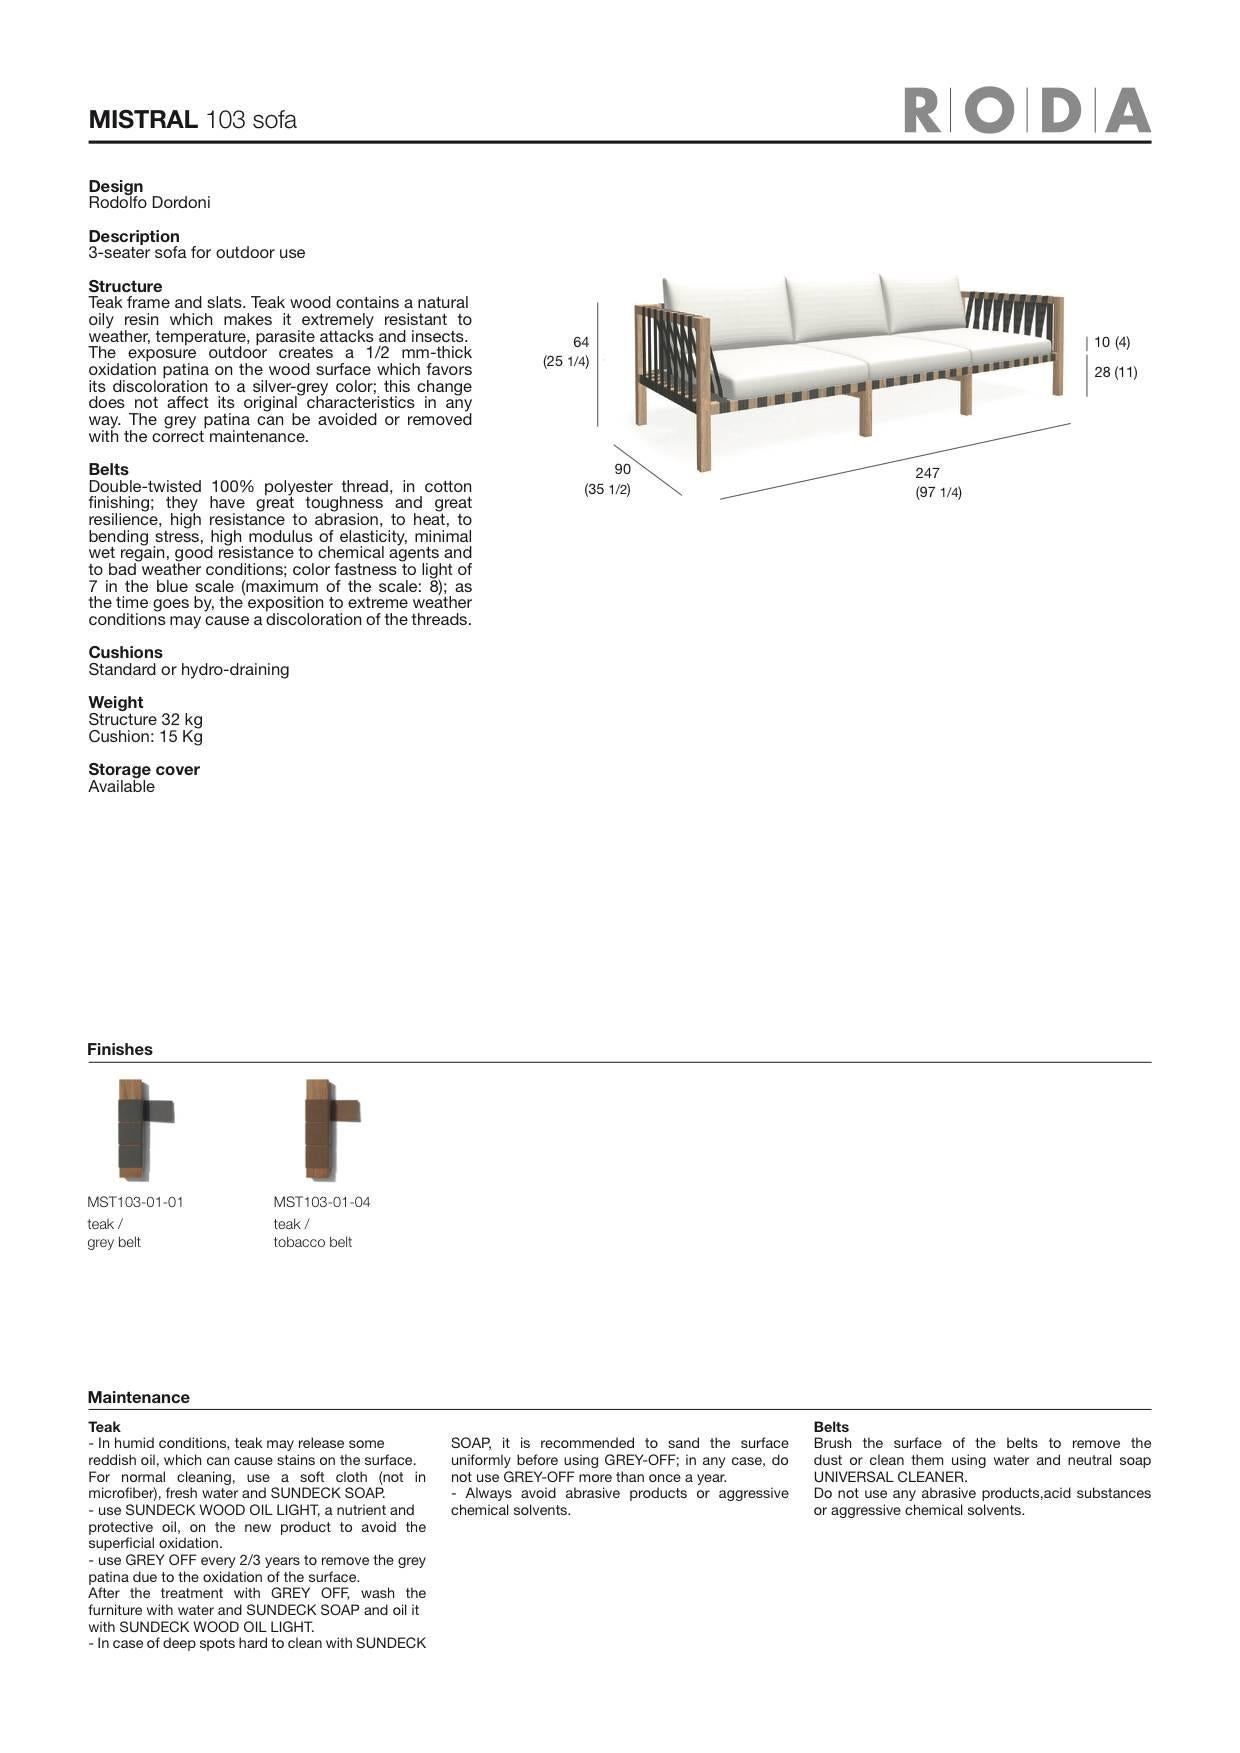 Roda Mistral 103 Three-Seat Sofa in Teak for Outdoor/Indoor Use (Italienisch) im Angebot